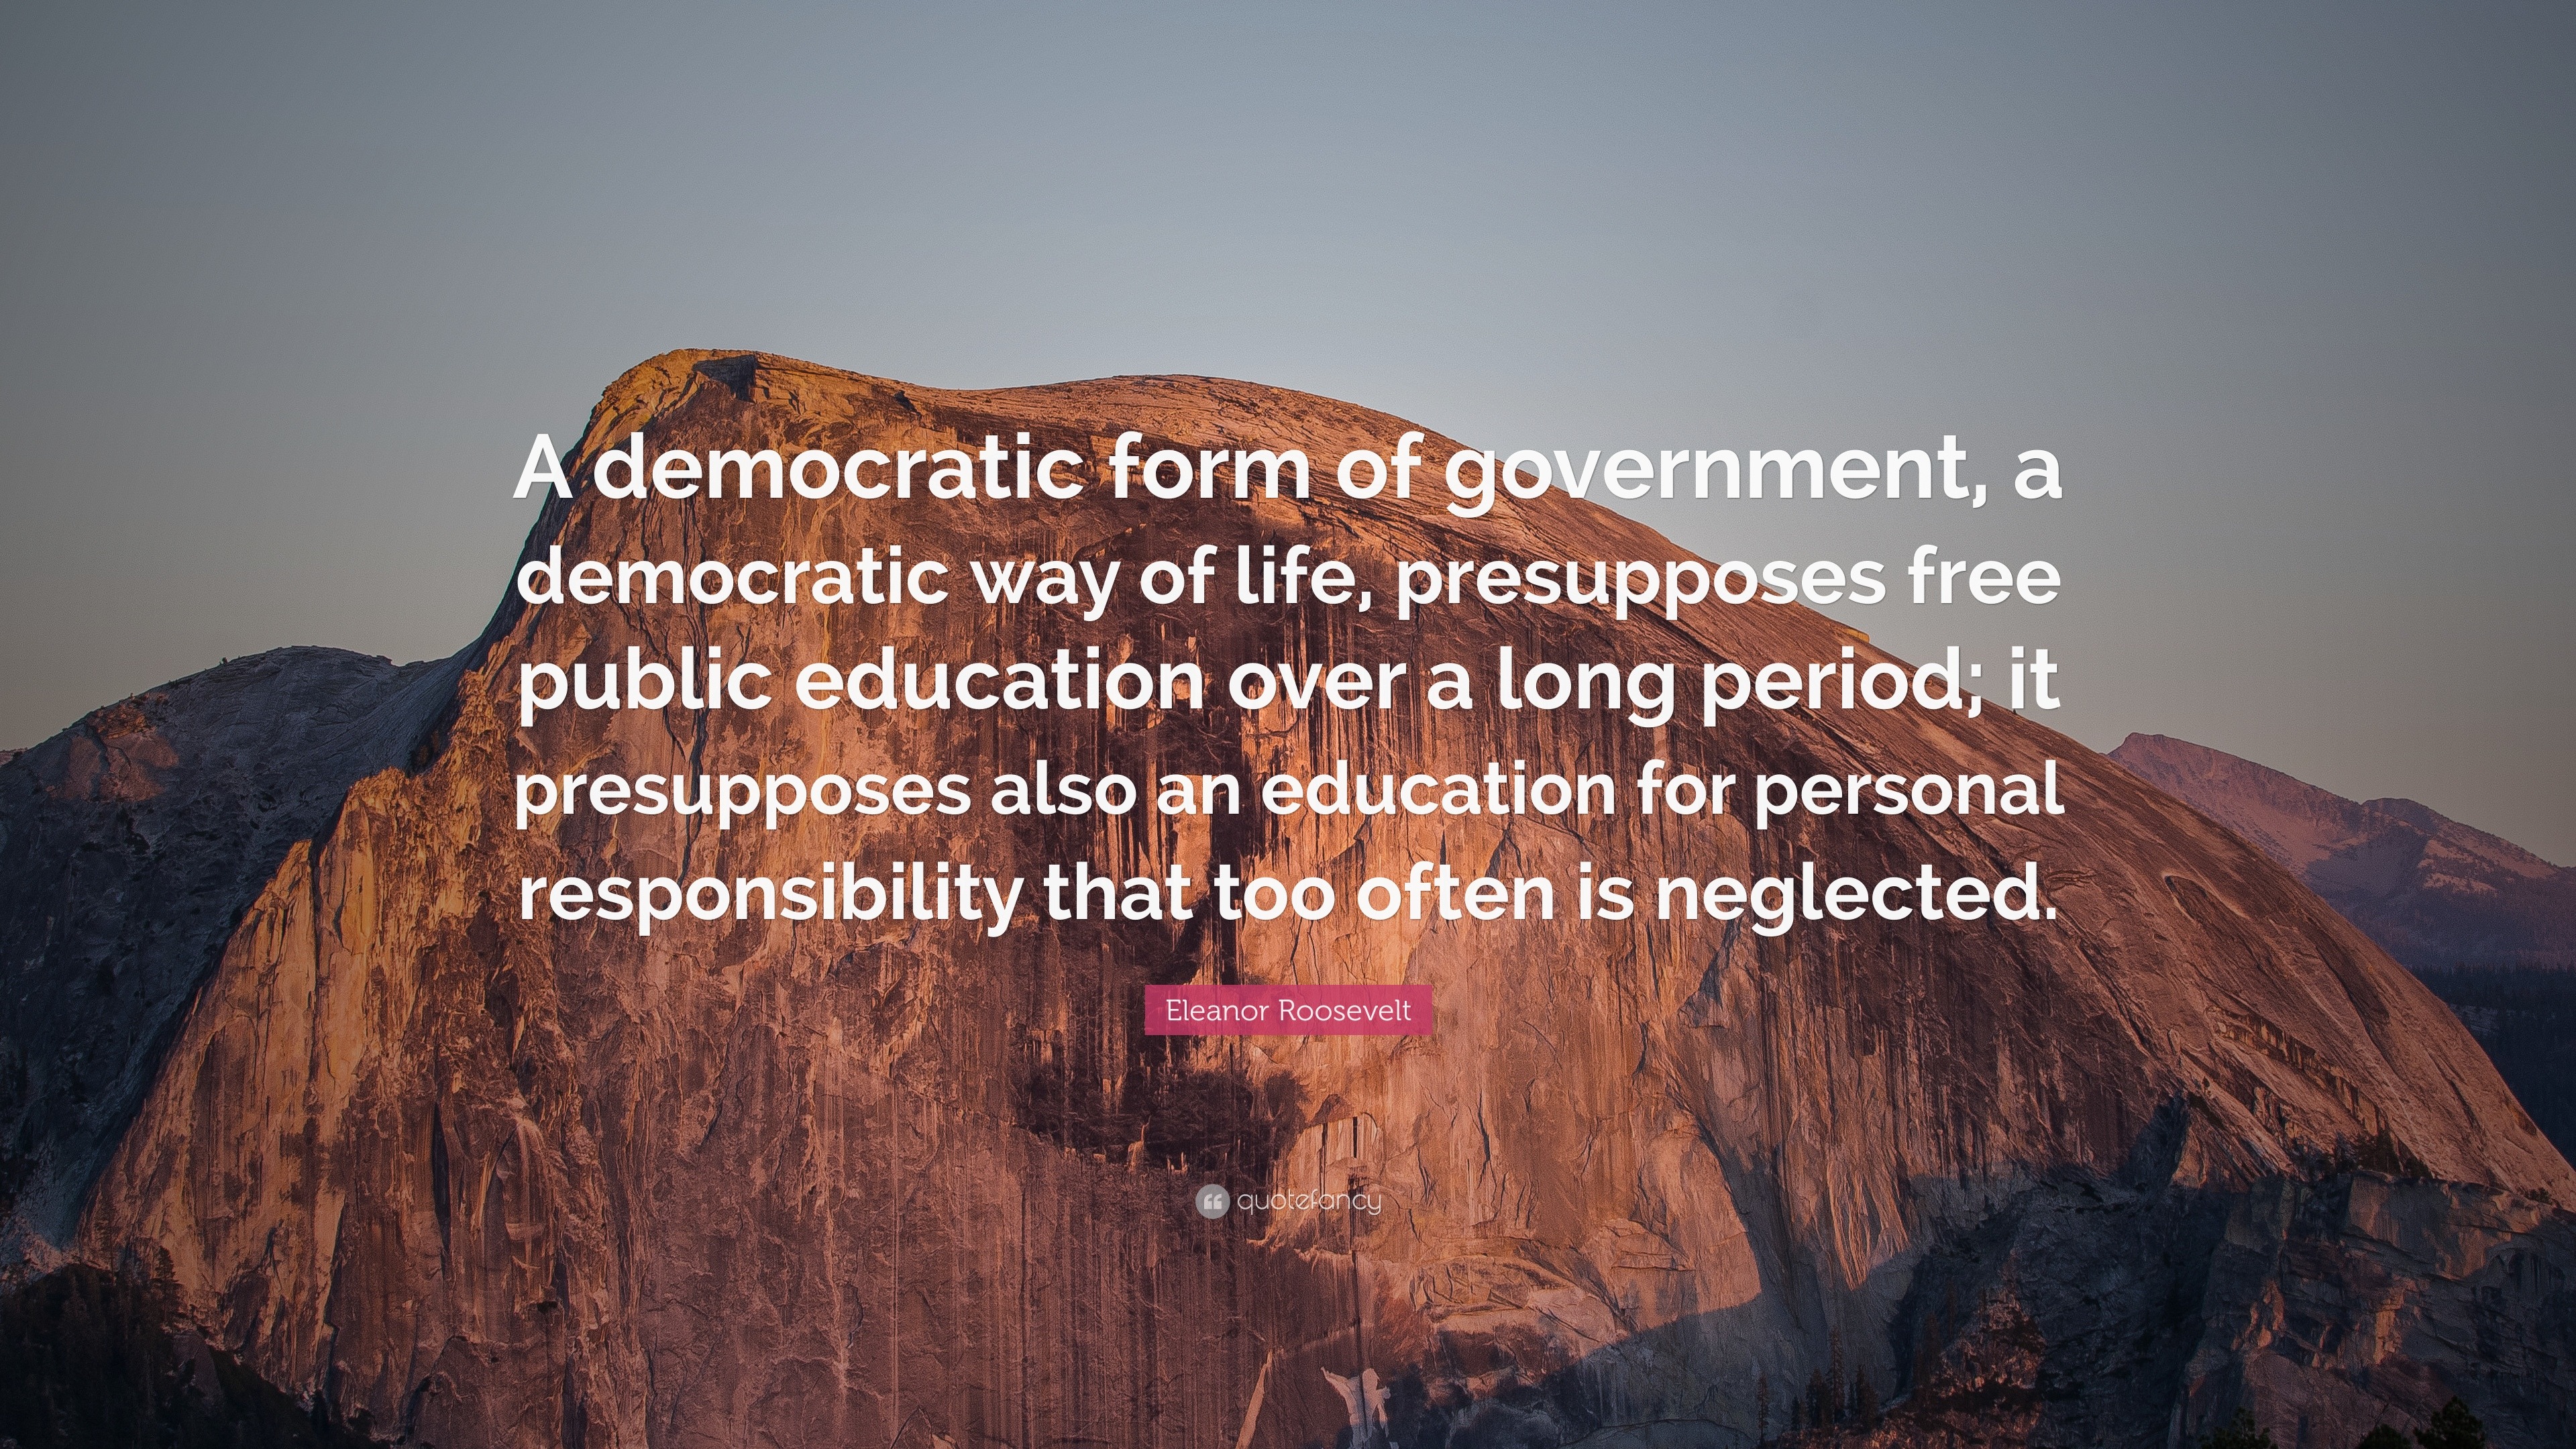 Eleanor Roosevelt Quote: “A democratic form of government, a democratic